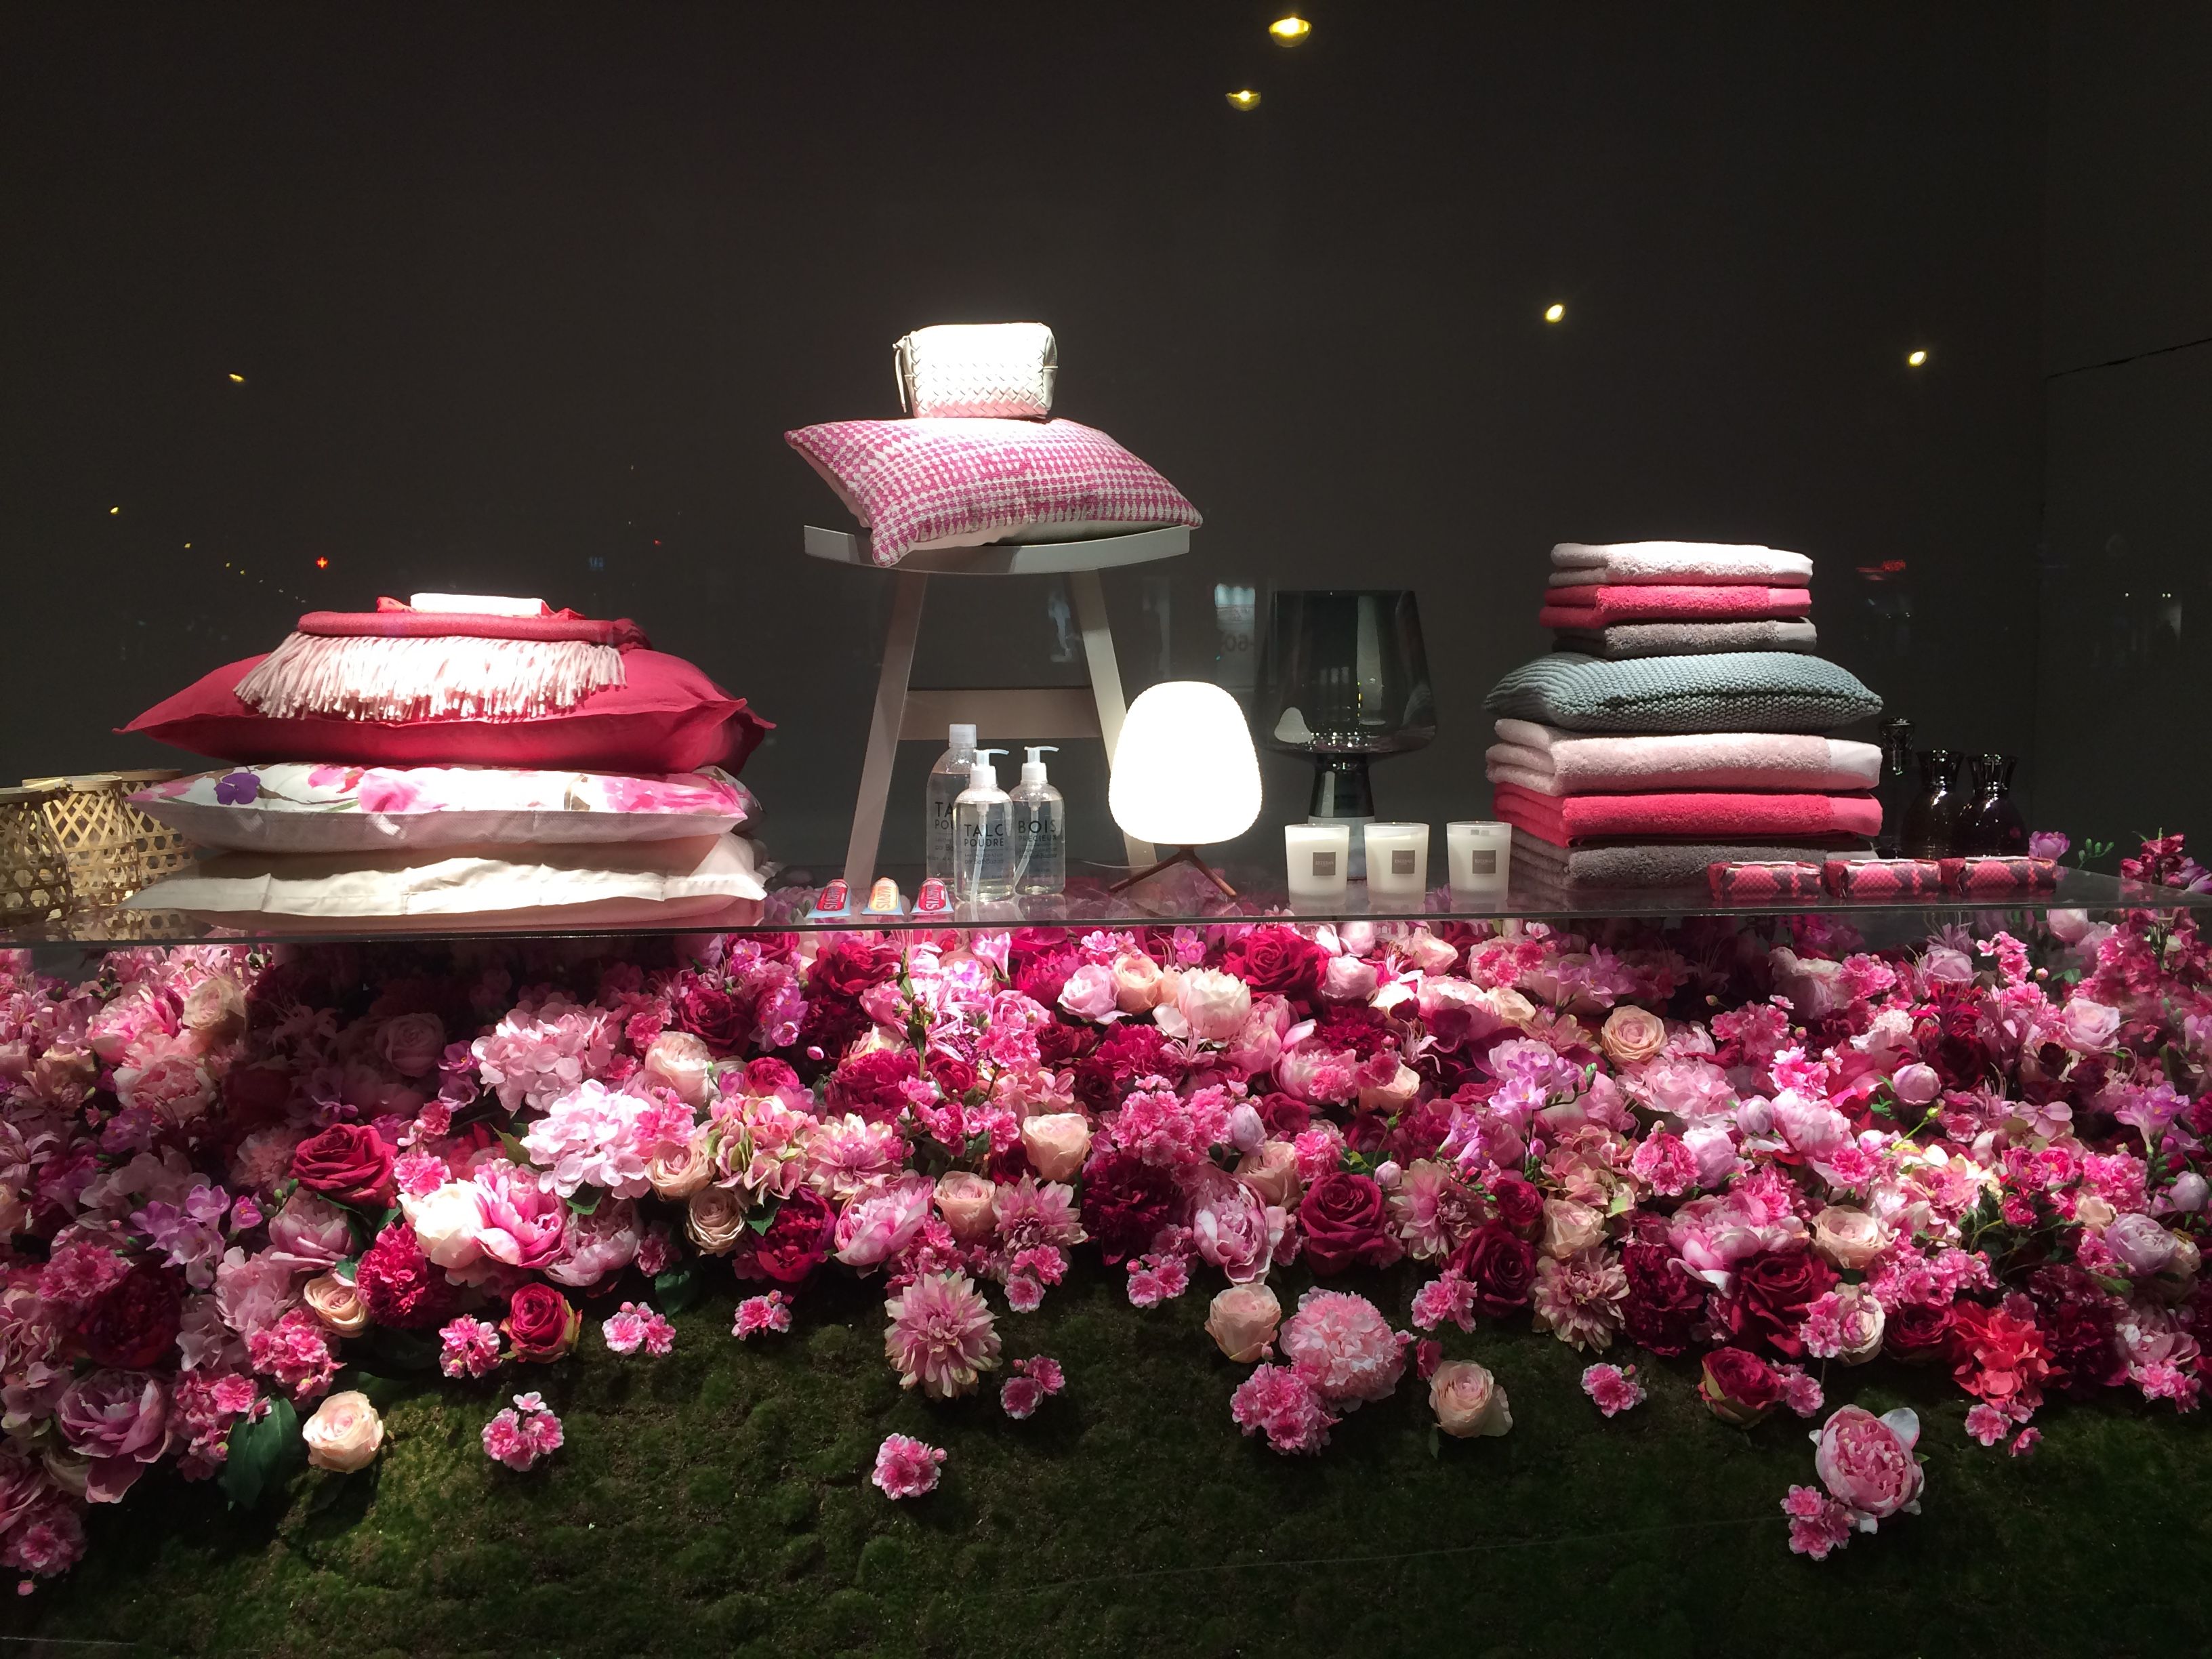 E.Bosco Wien - Raumgestaltung Rosa Blüten in einem Raum